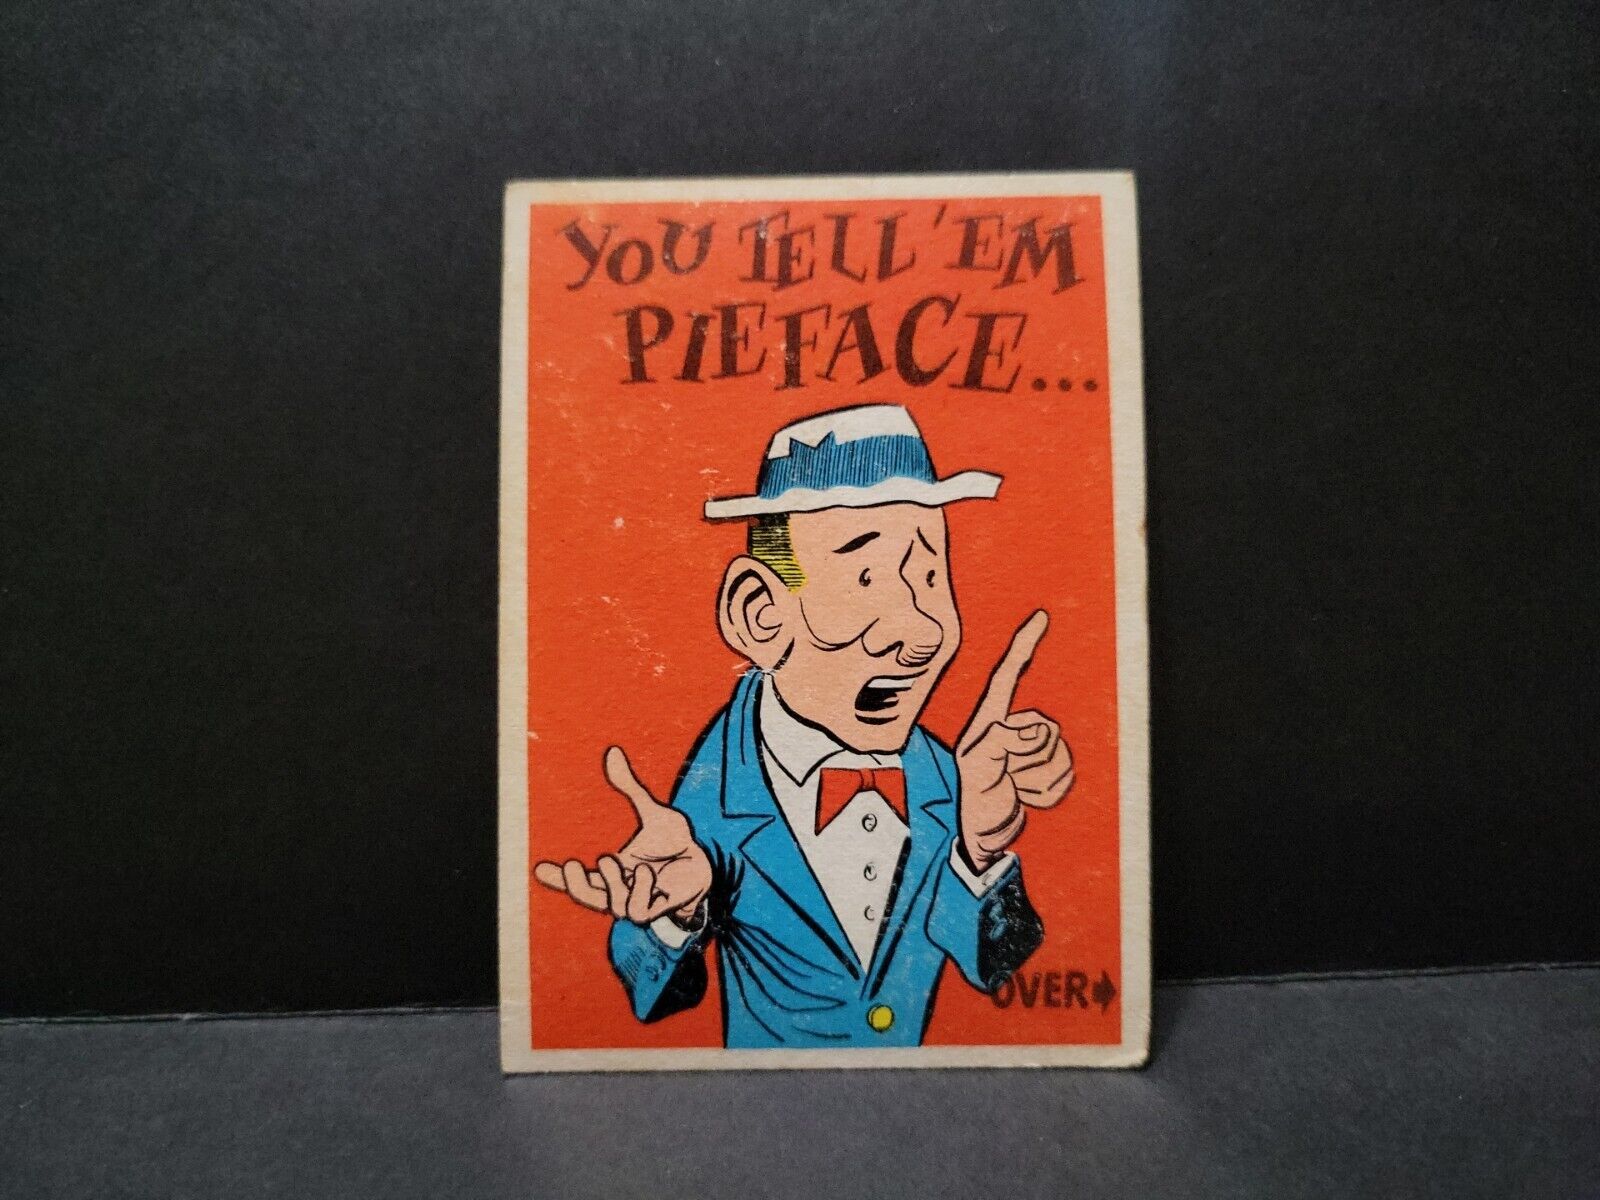 1961 Donruss Idiot Card # 33 You tell 'em Pieface... 